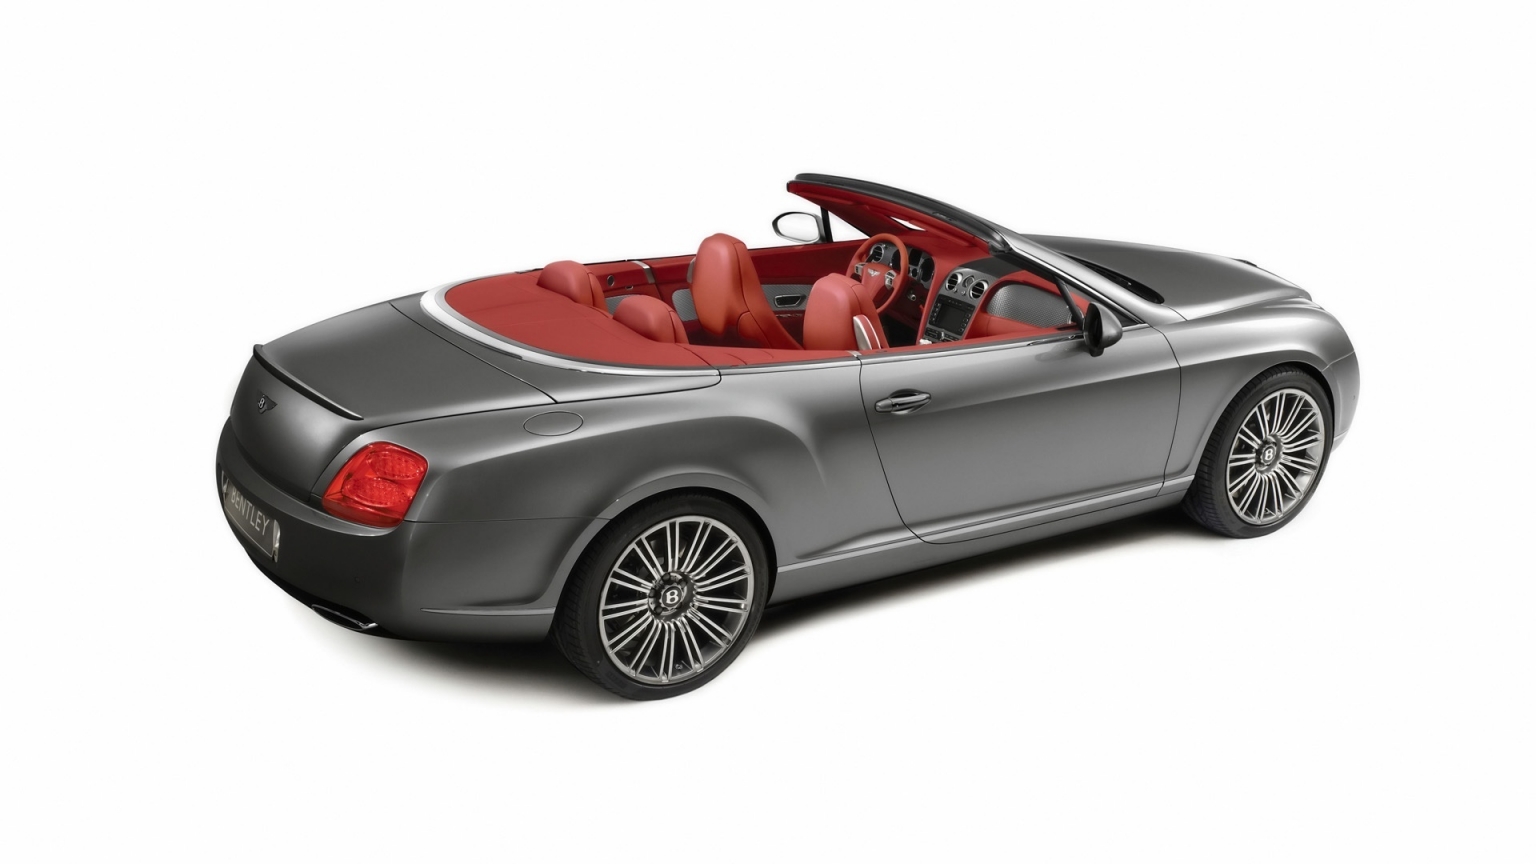 Bentley Continental GTC Speed Studio 2009 for 1536 x 864 HDTV resolution